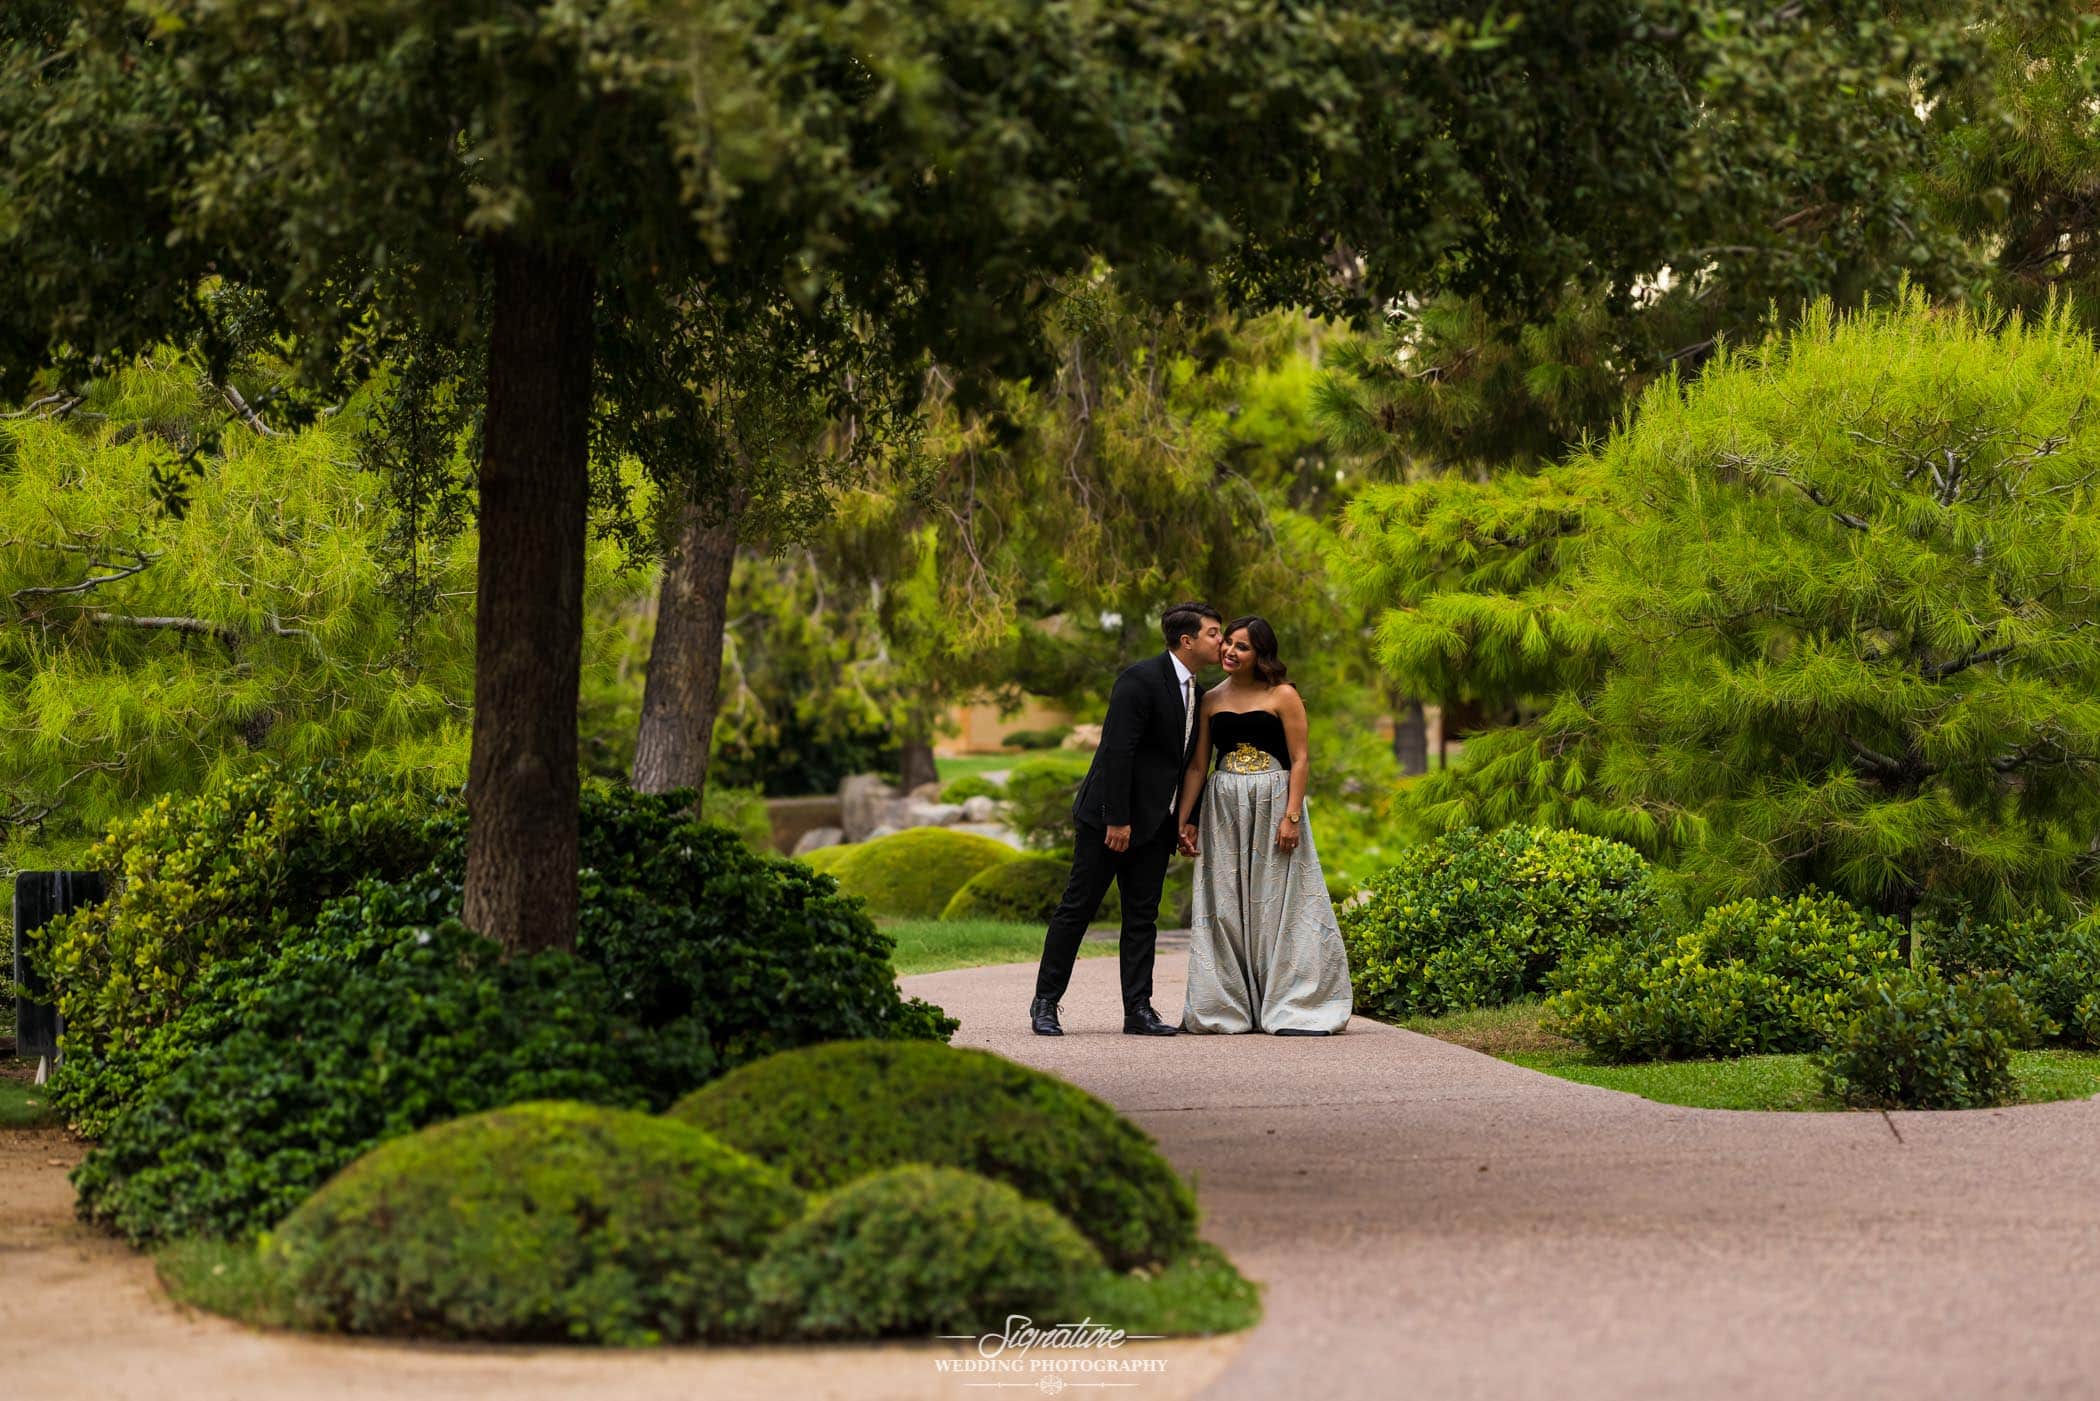 Man kissing woman on cheek in botanical garden